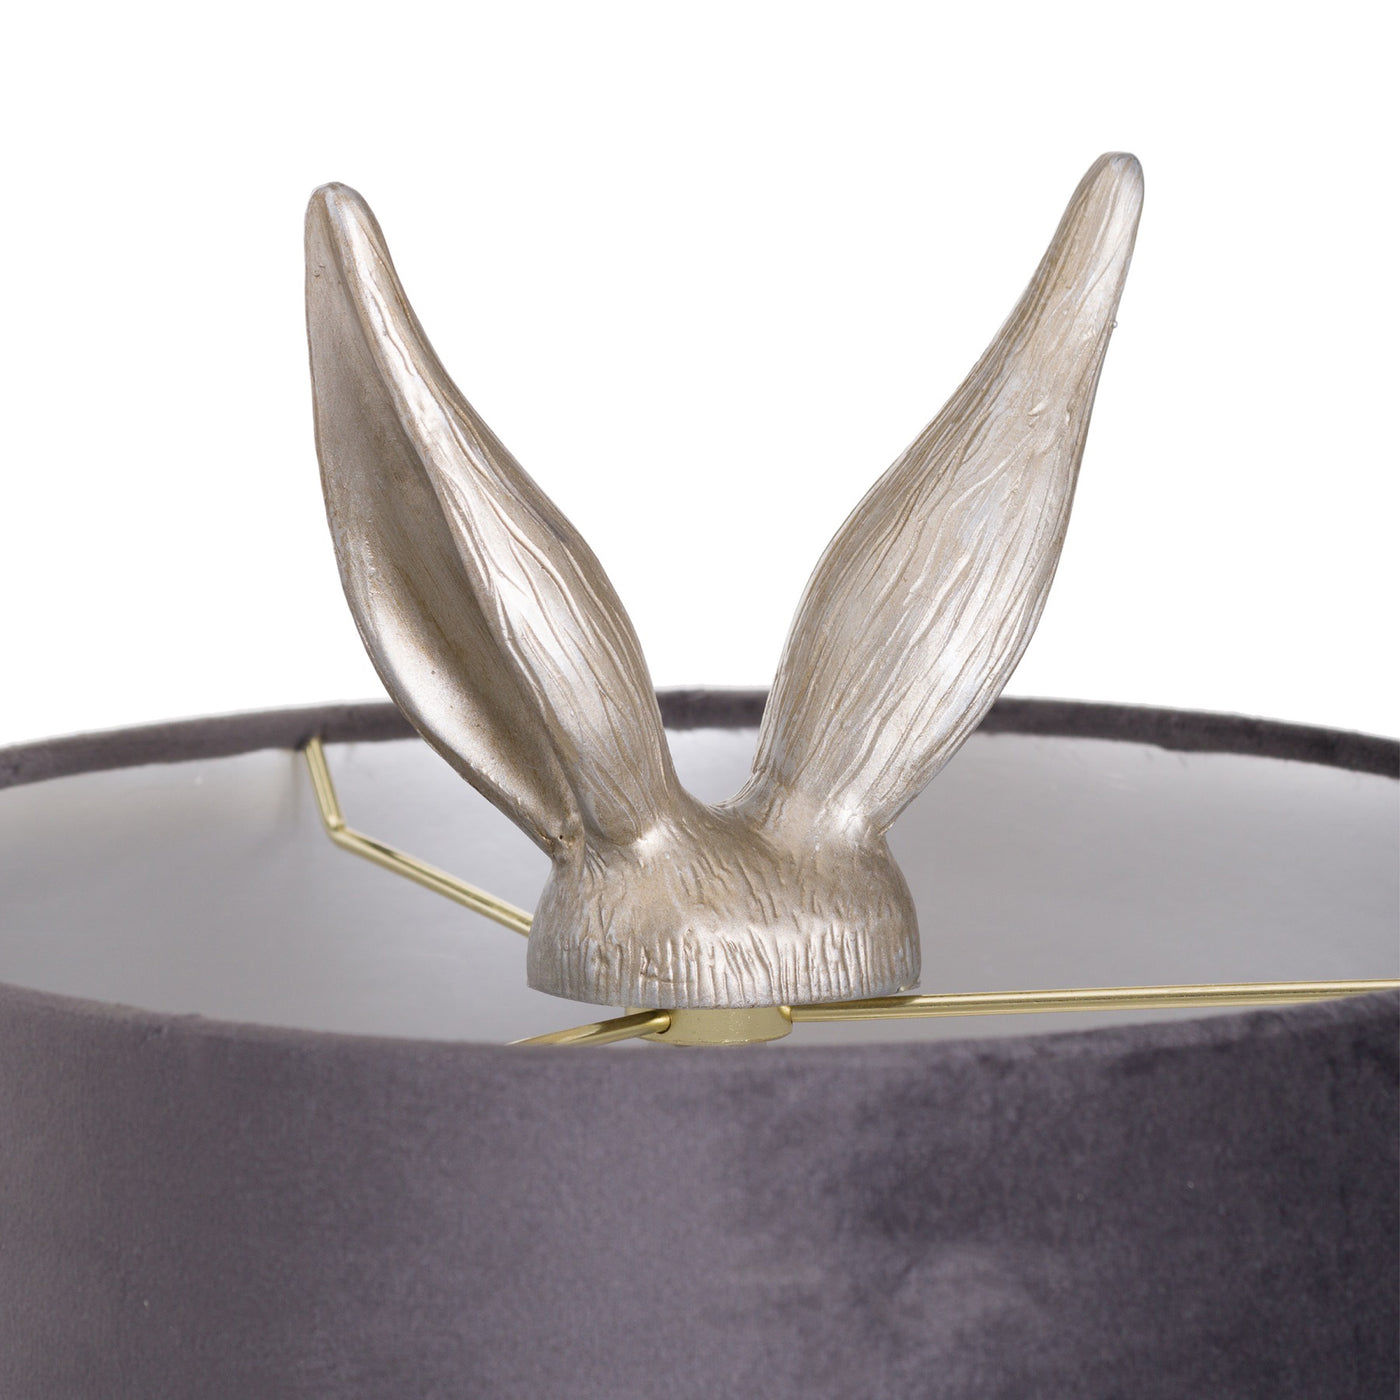 Hiding Hare - Table Lamp Silver & Grey